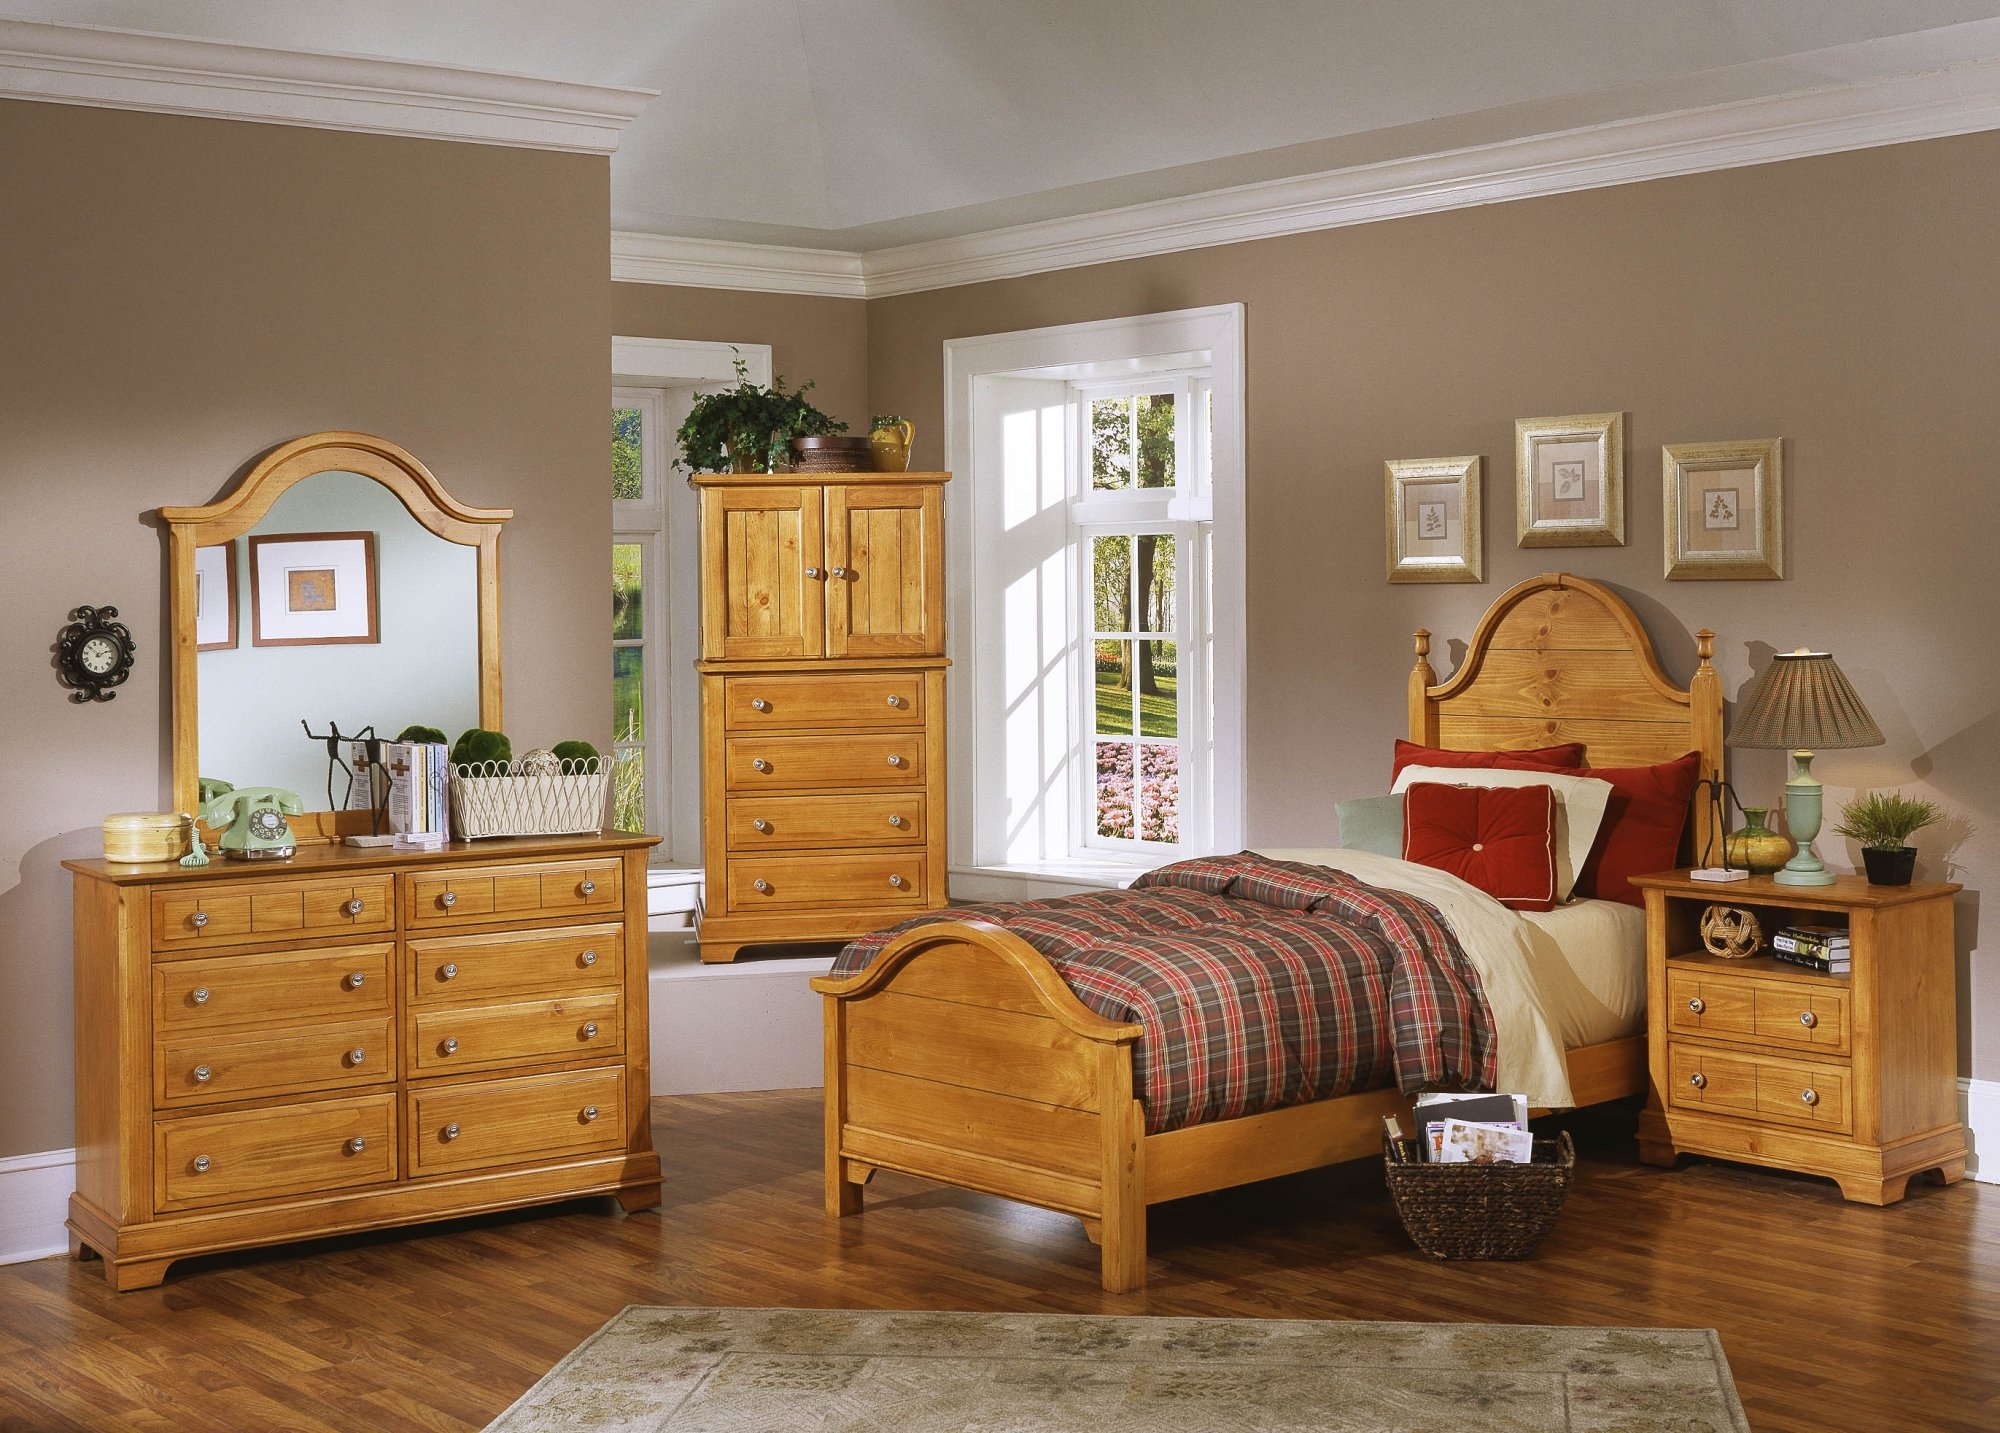 Home bedroom designs inspirational pine bedroom furniture arouse